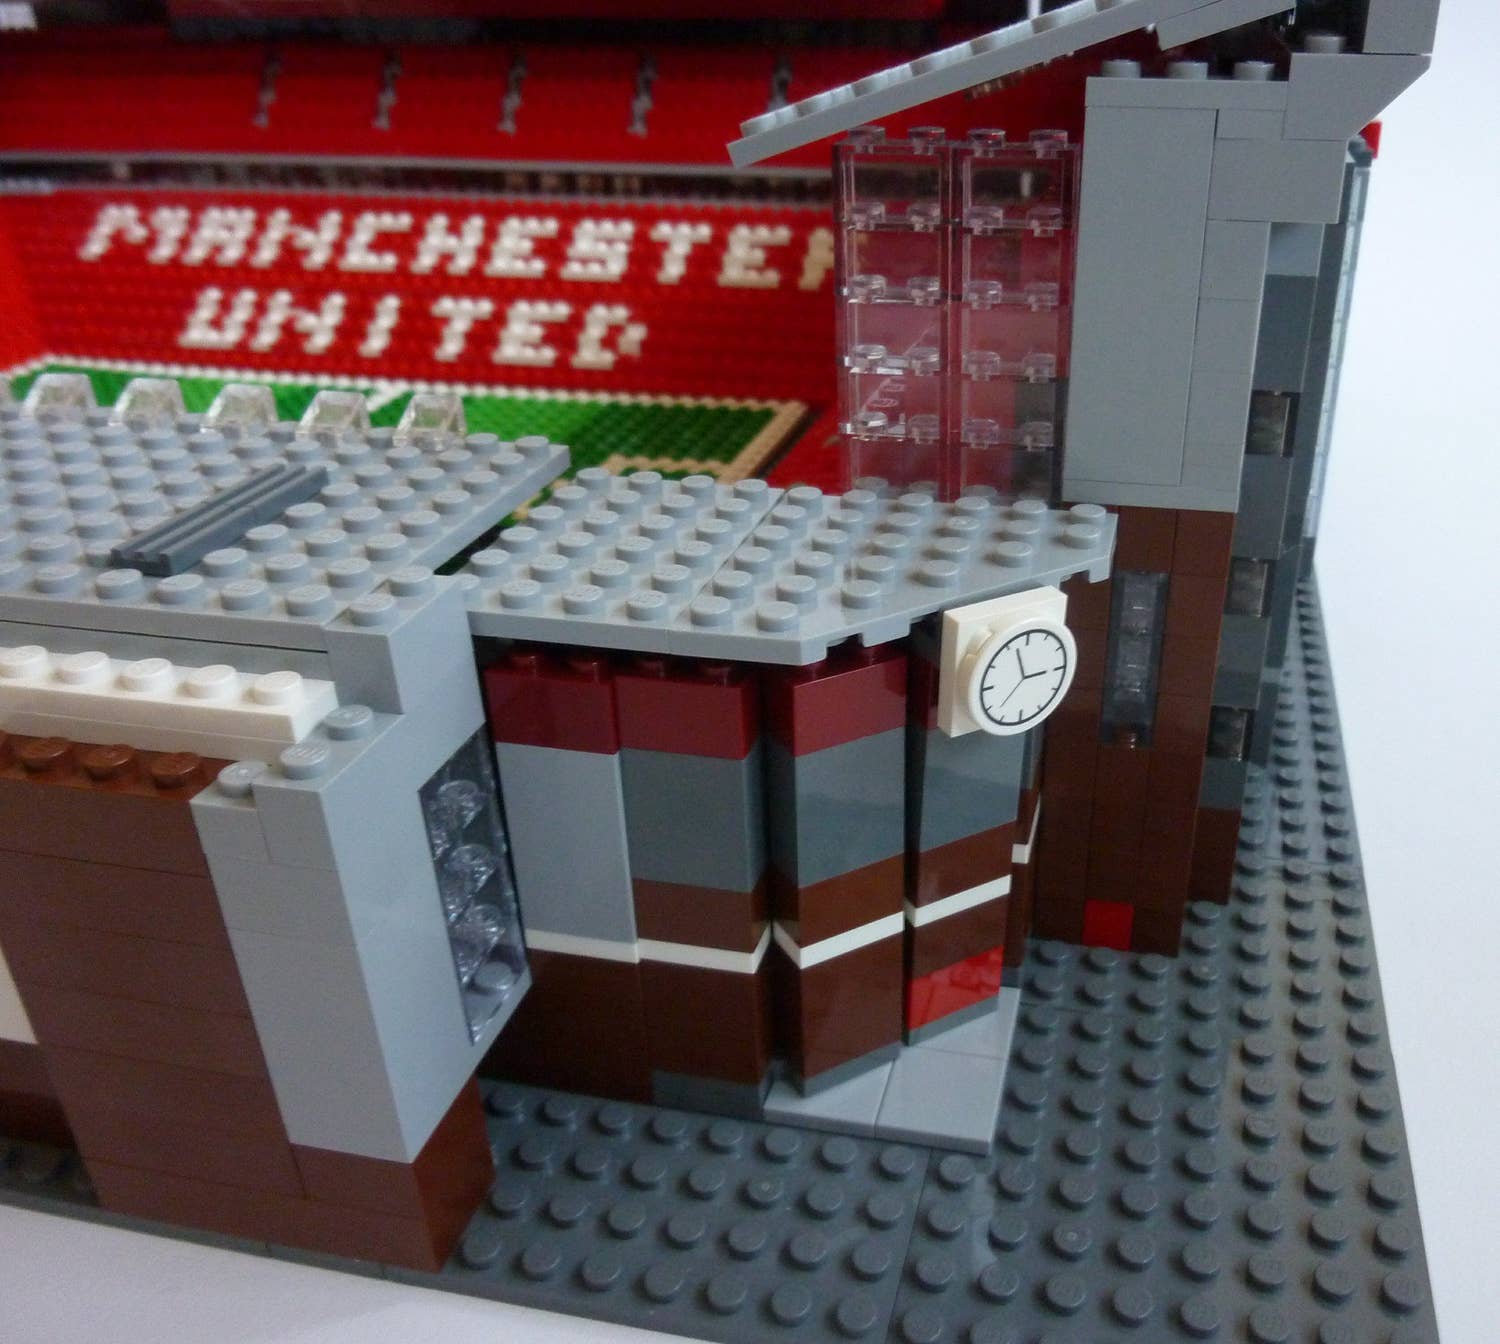 Meet FC Brickstand – the new Lego football club on the block